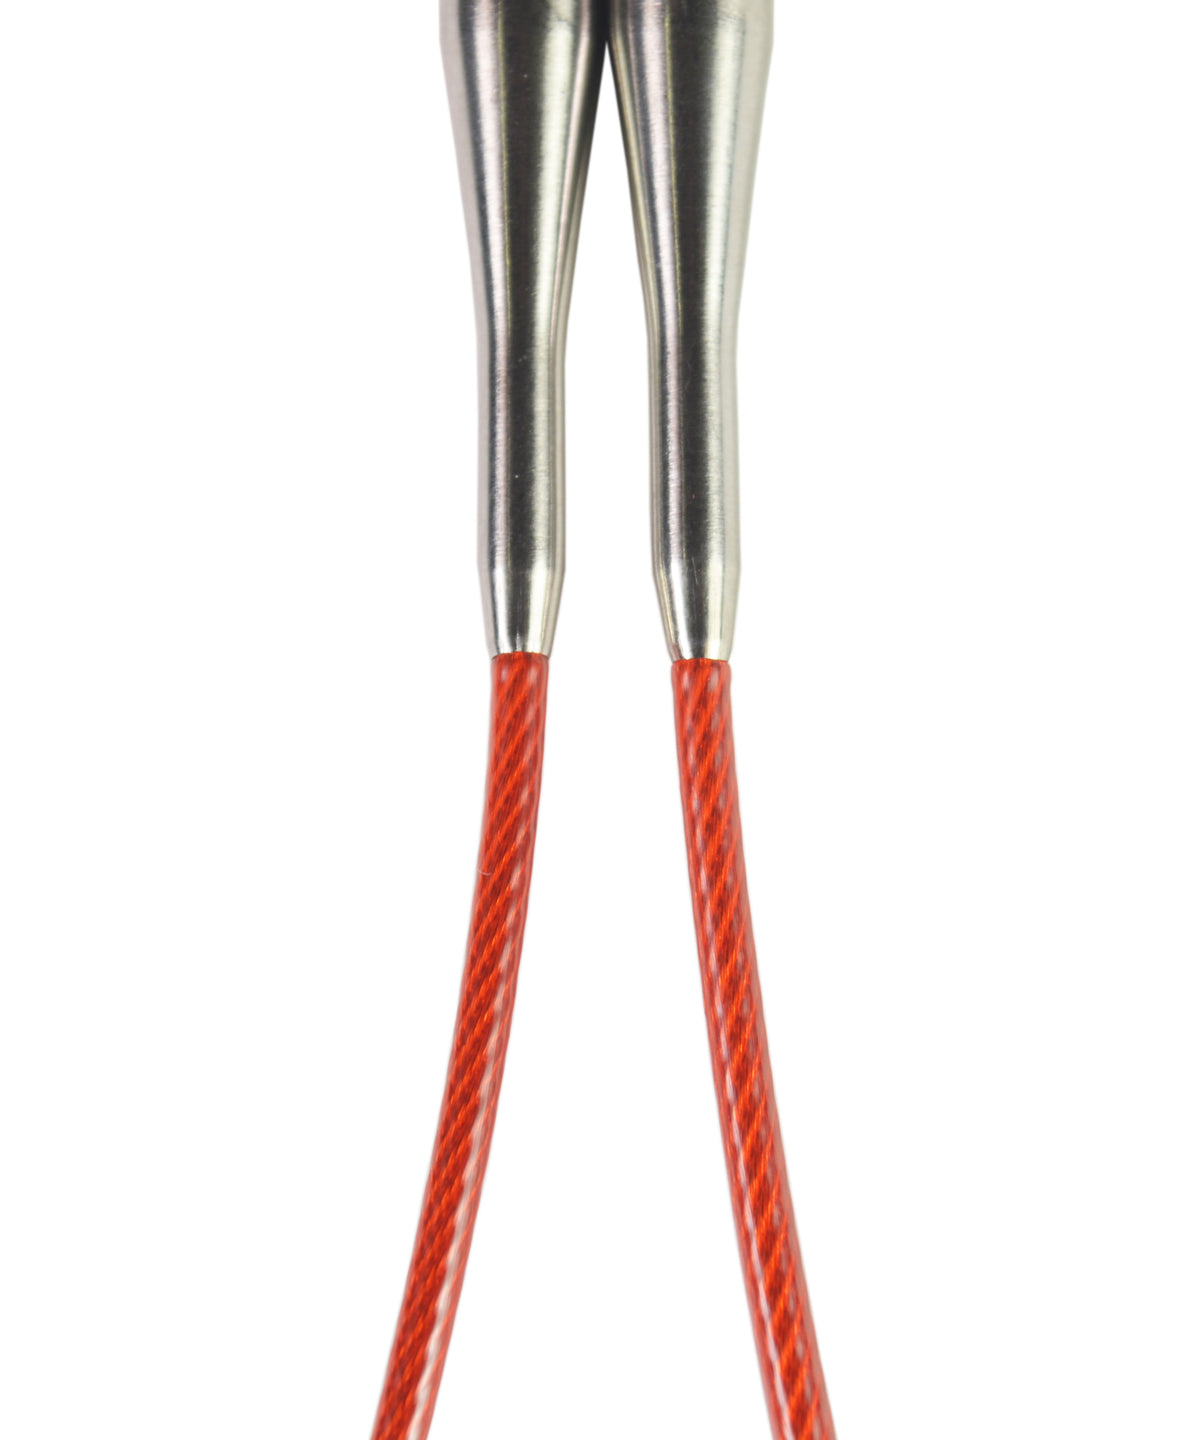 ChiaoGoo 24 inch Regular Red Stainless Steel Circular Knitting Needles (Tip Sizes US-0 to US-11) 3 mm | US-2.5